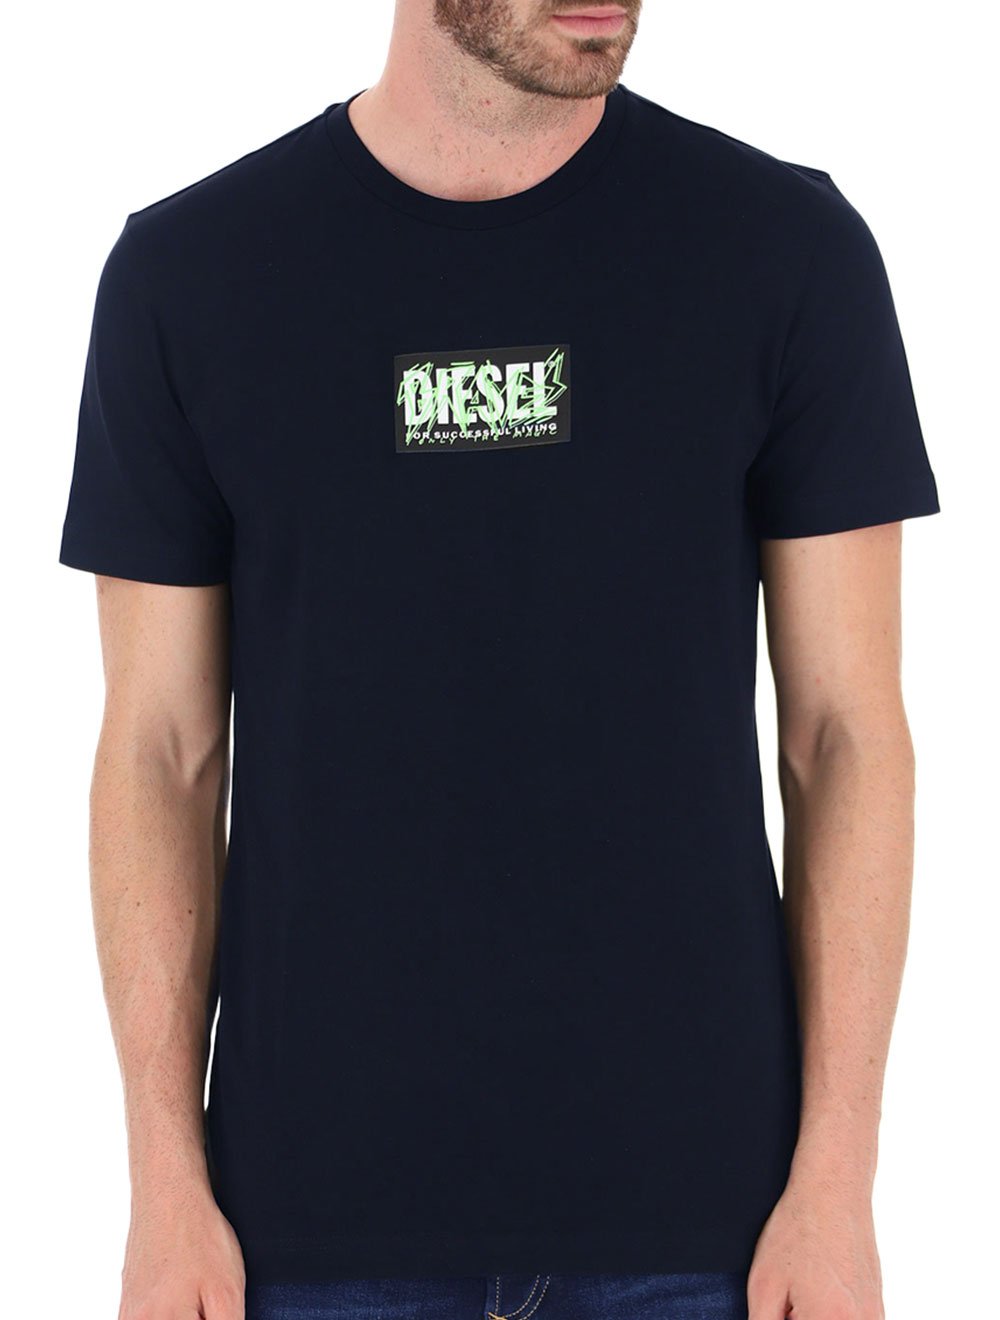 Camiseta Diesel Masculina T-Diegos-N34 Patch Azul Marinho